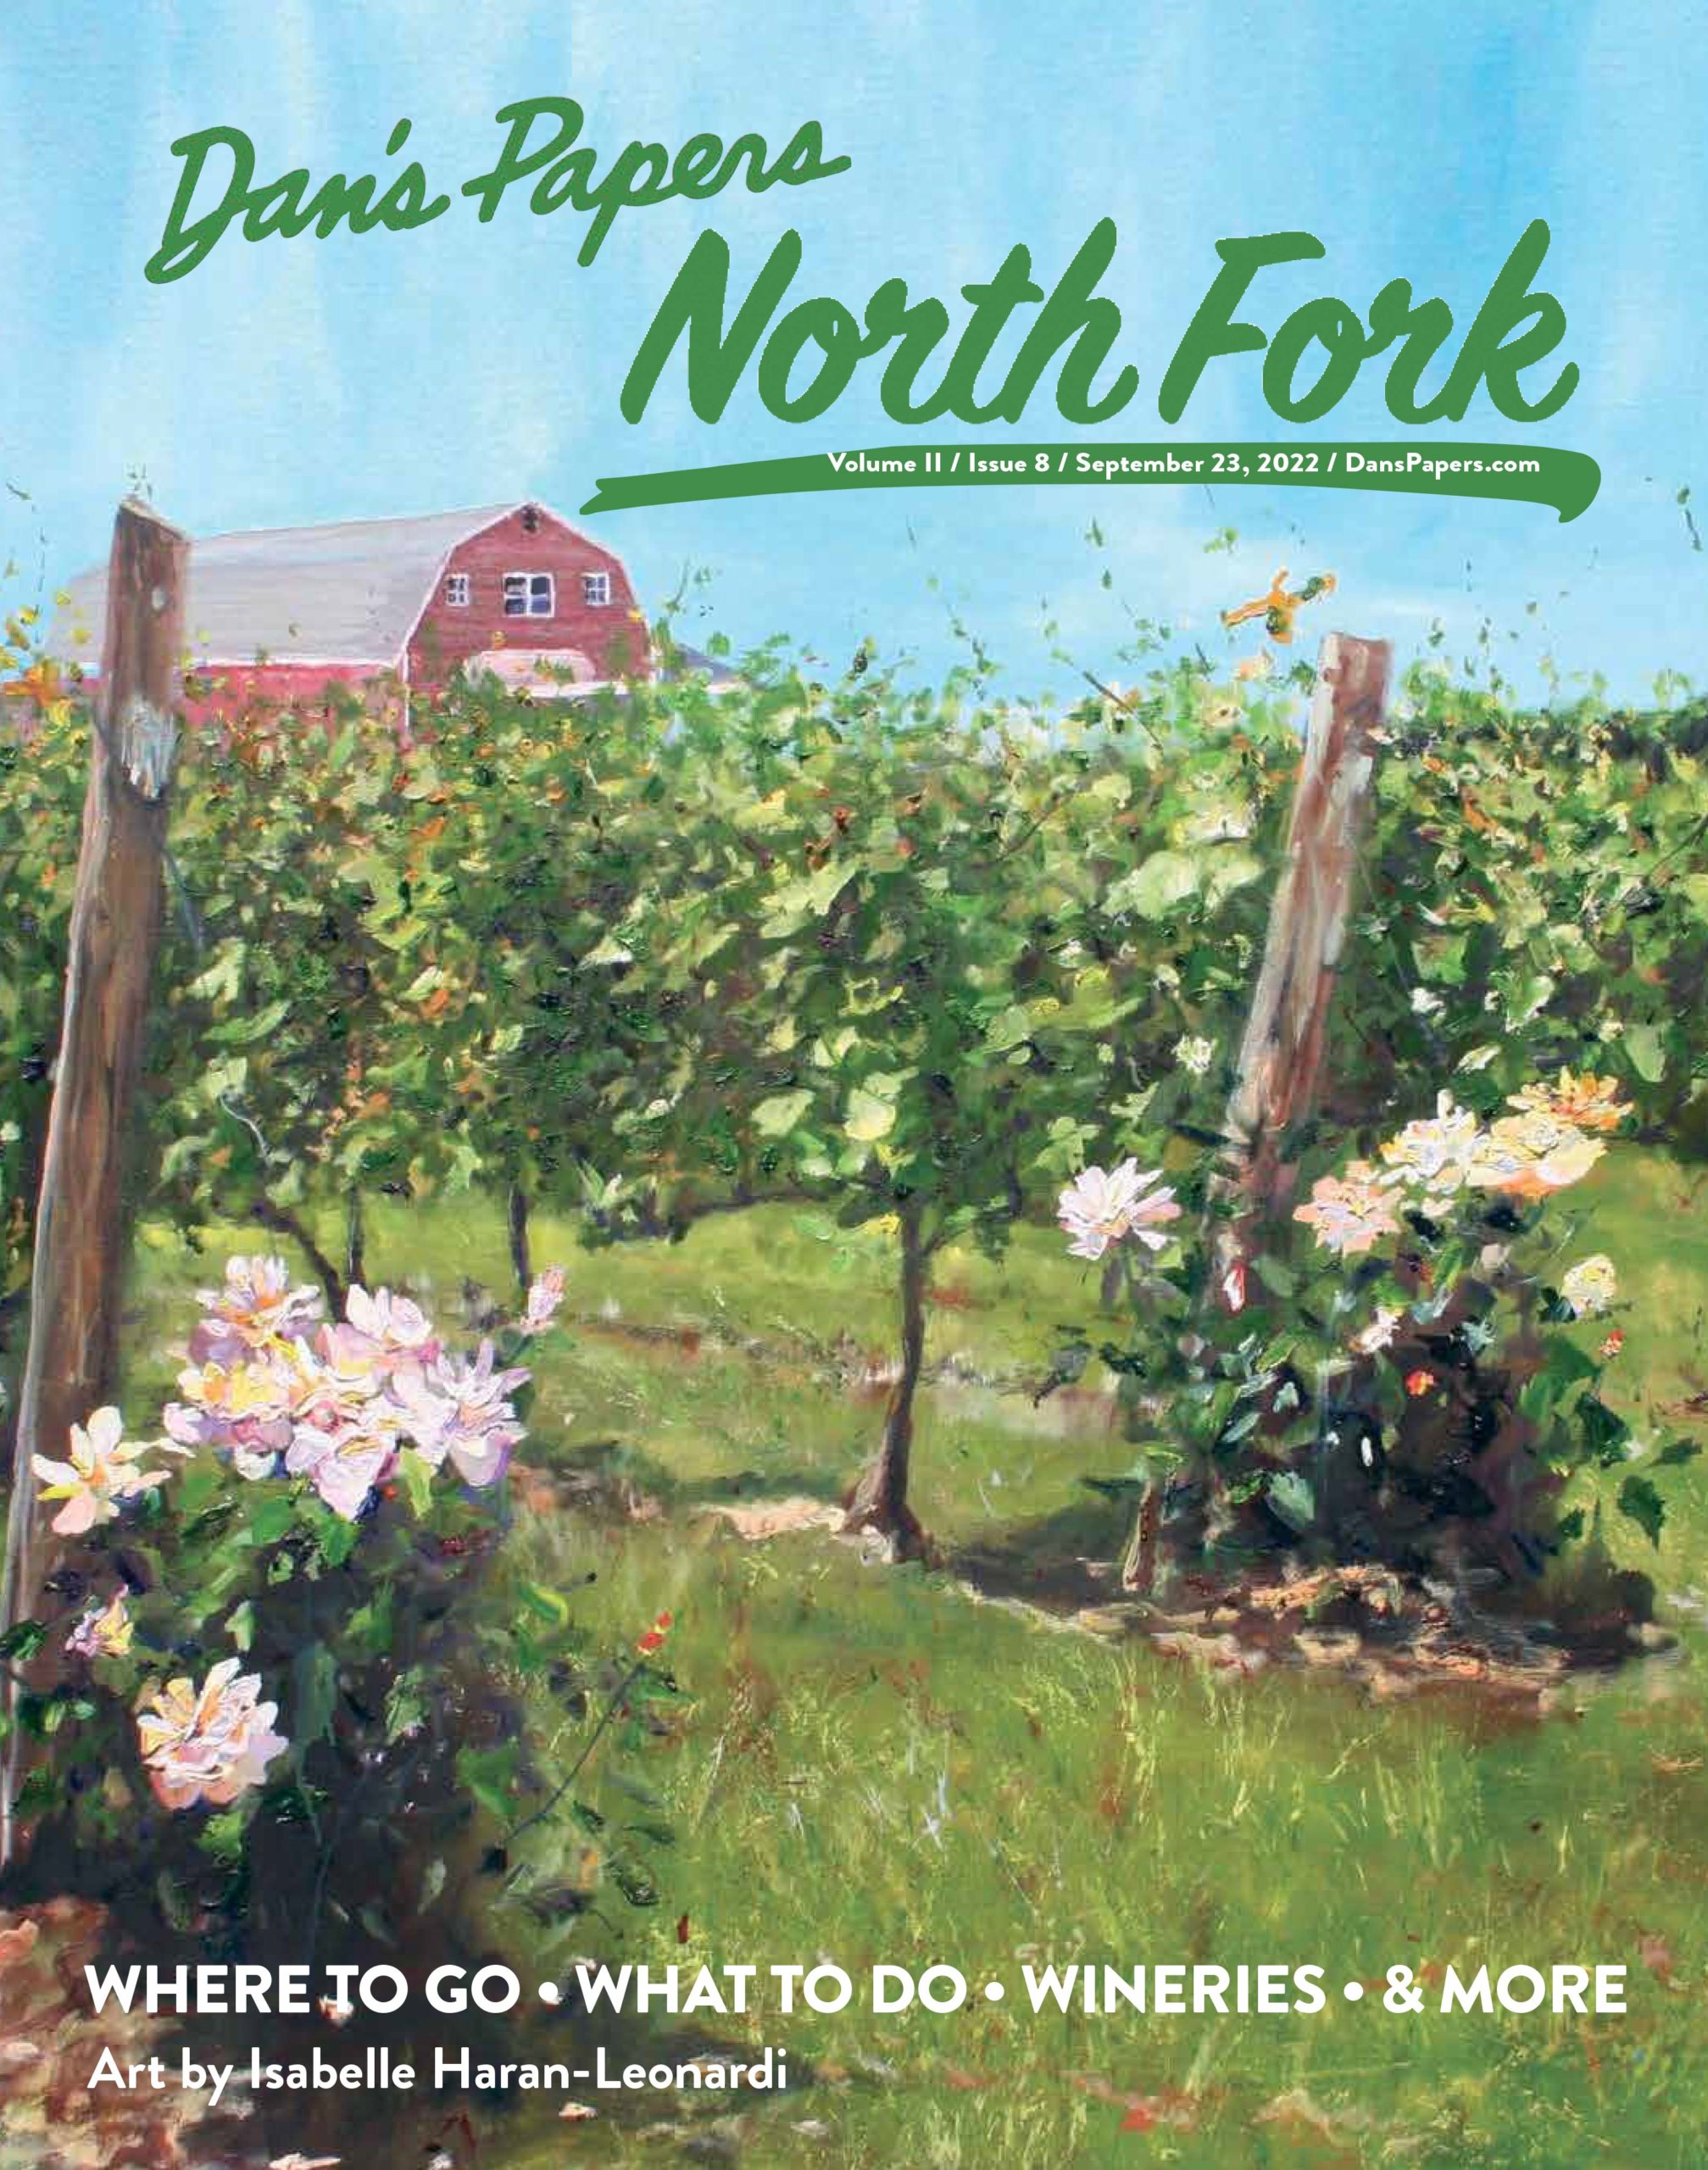 Dan's Papers North Fork, September 23, 2022 cover art by Isabelle Haran-Leonardi